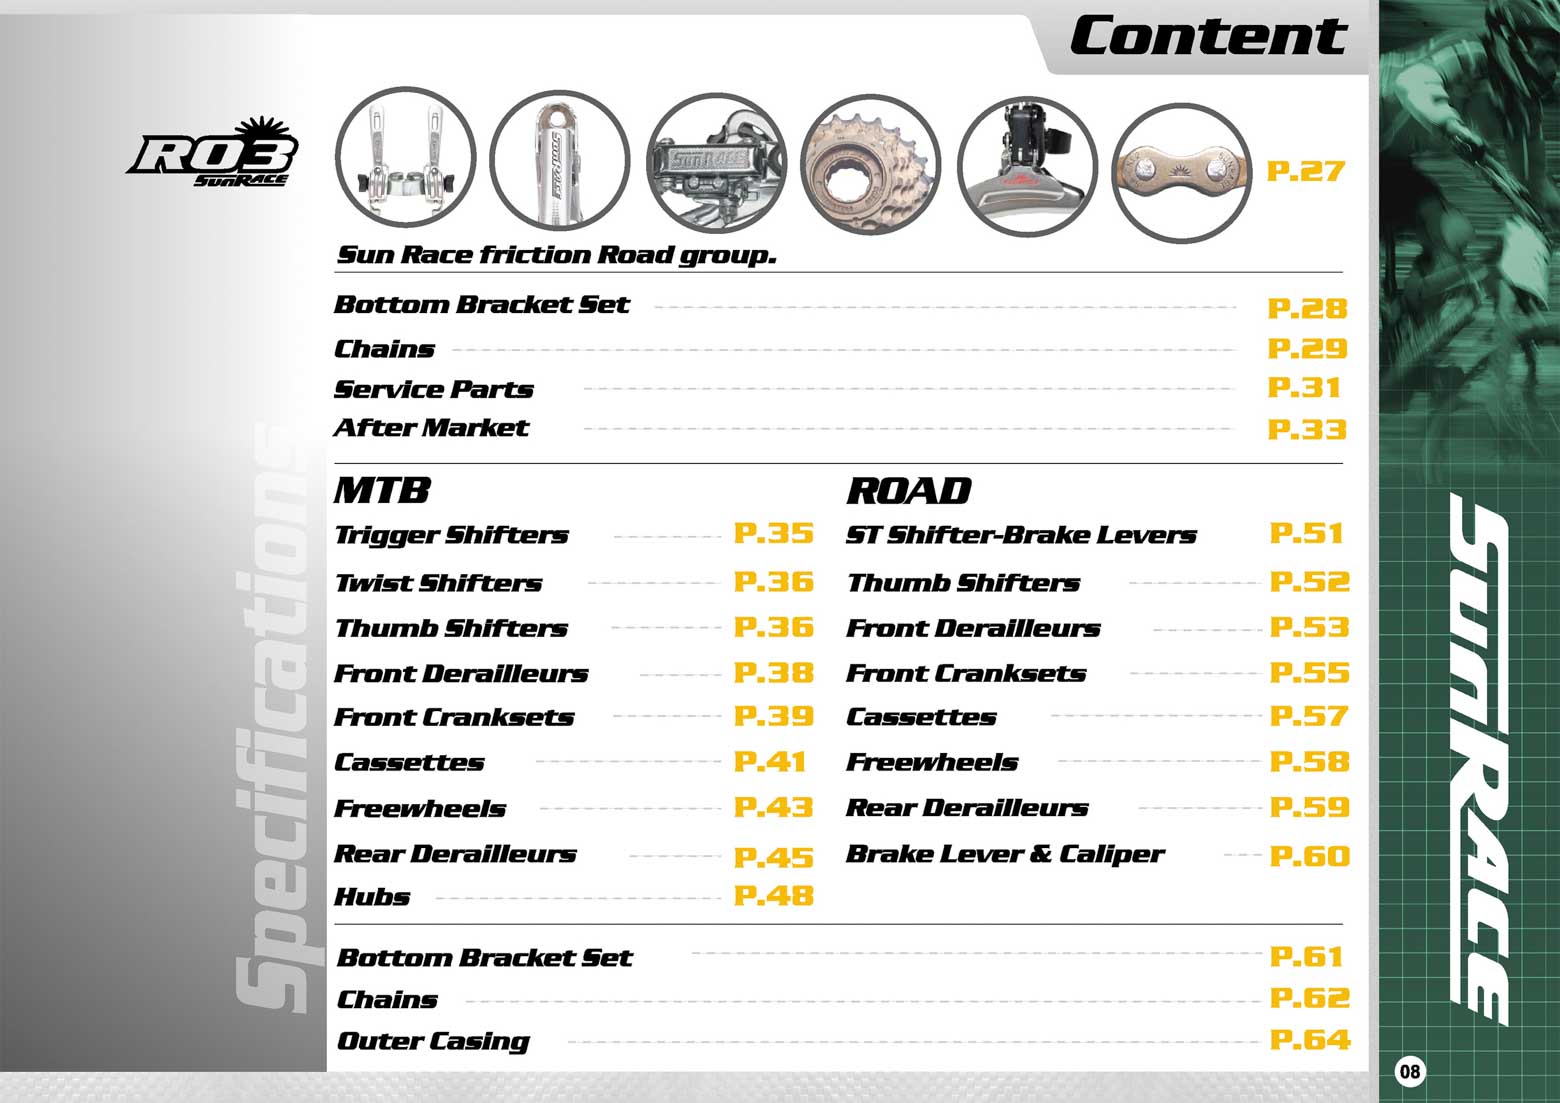 SunRace Product Catalogue 2009-2010 page 08 main image